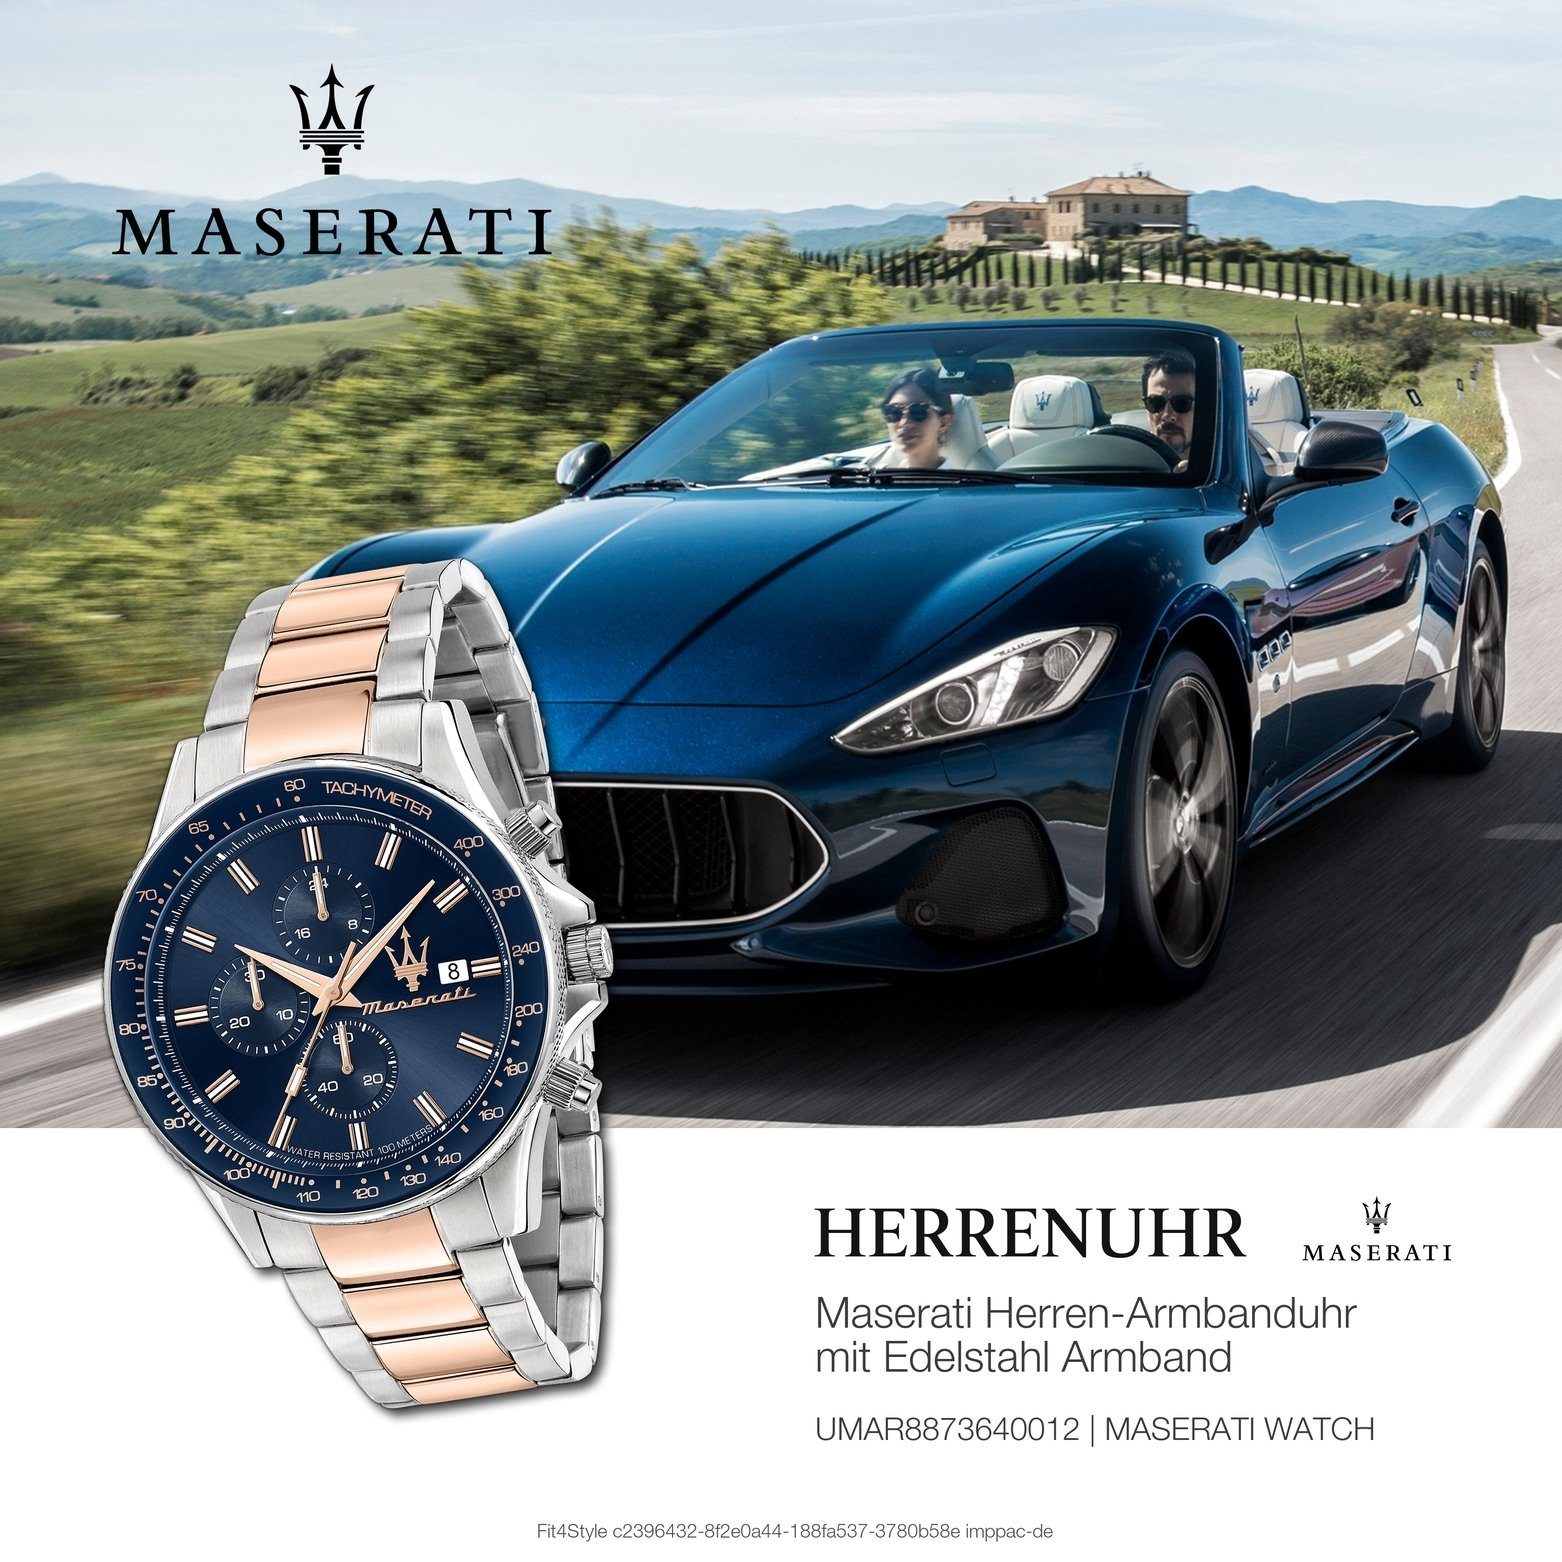 groß Italy (ca. Edelstahlarmband, Herrenuhr bicolor MASERATI SFIDA, 44mm) Maserati Made-In Herren rund, Chronograph Chronograph